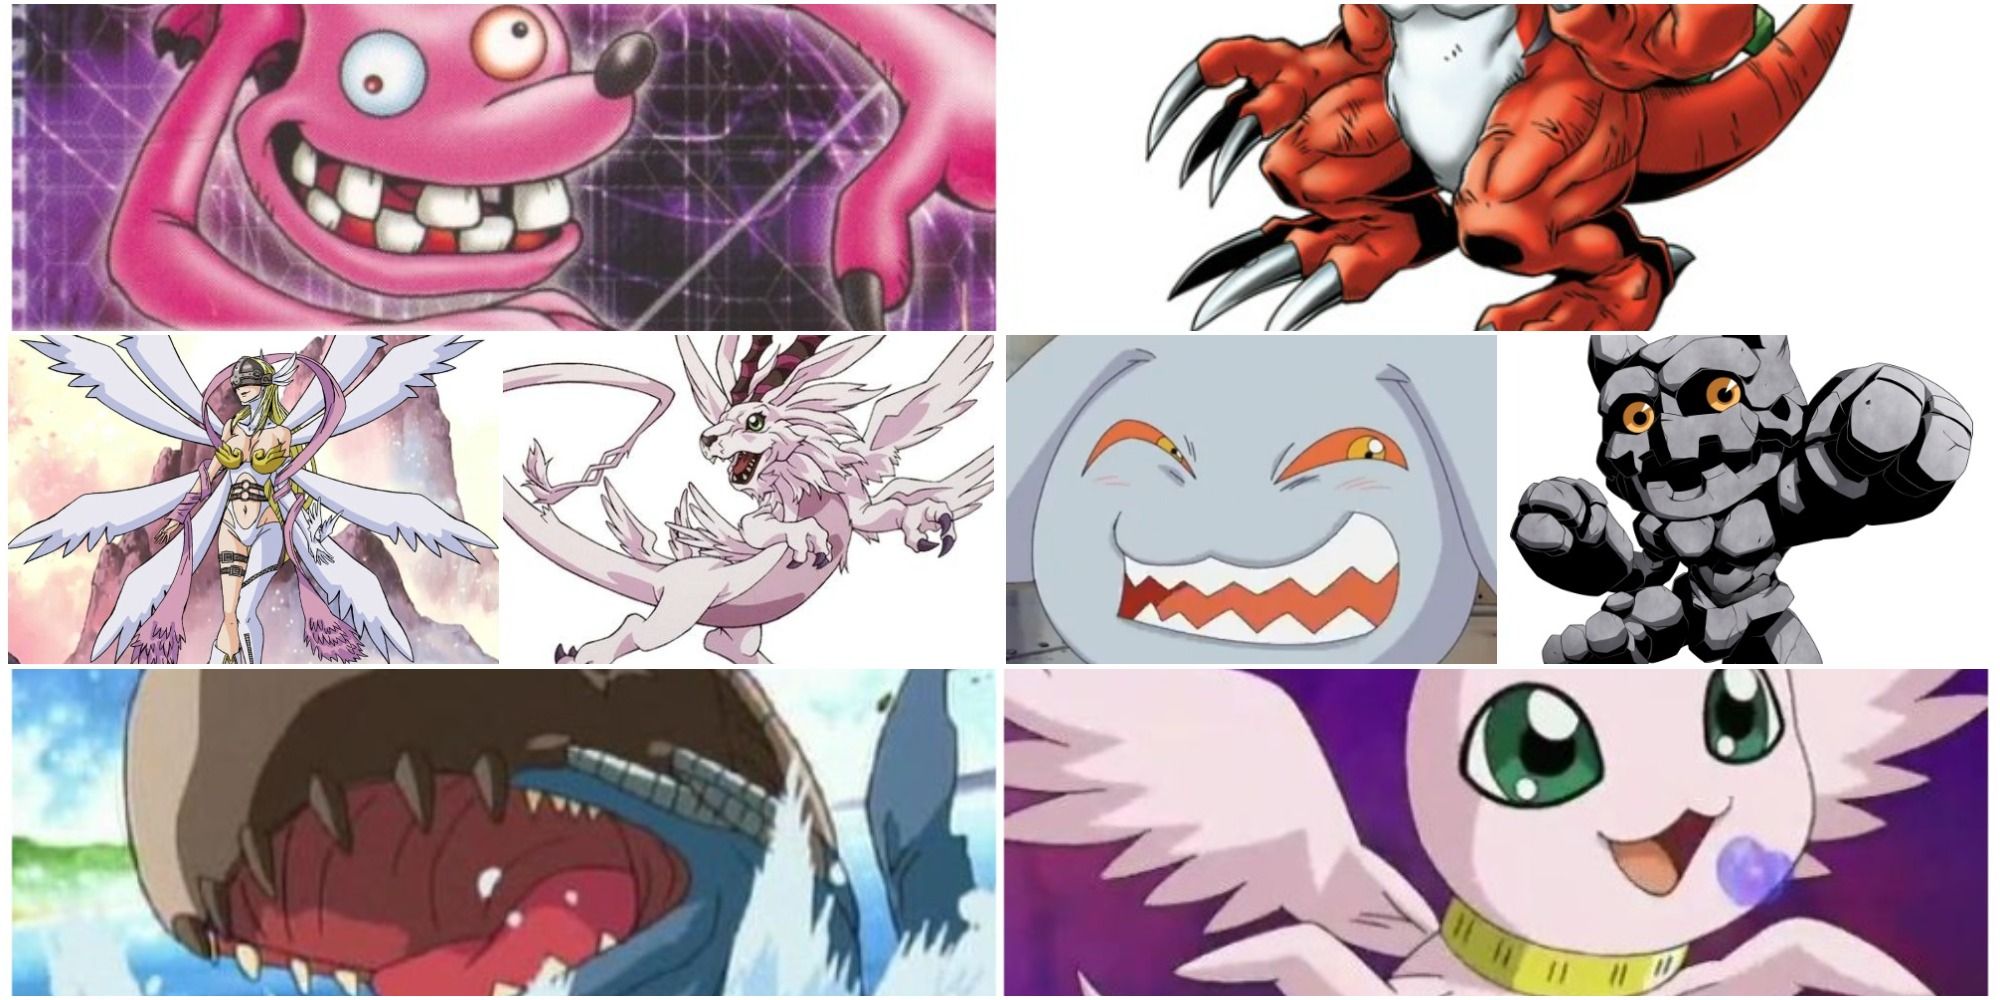 Digimon Weird Digivolutions feature with Angewomon, Whamon, Chuumon, Gotsumon, and more